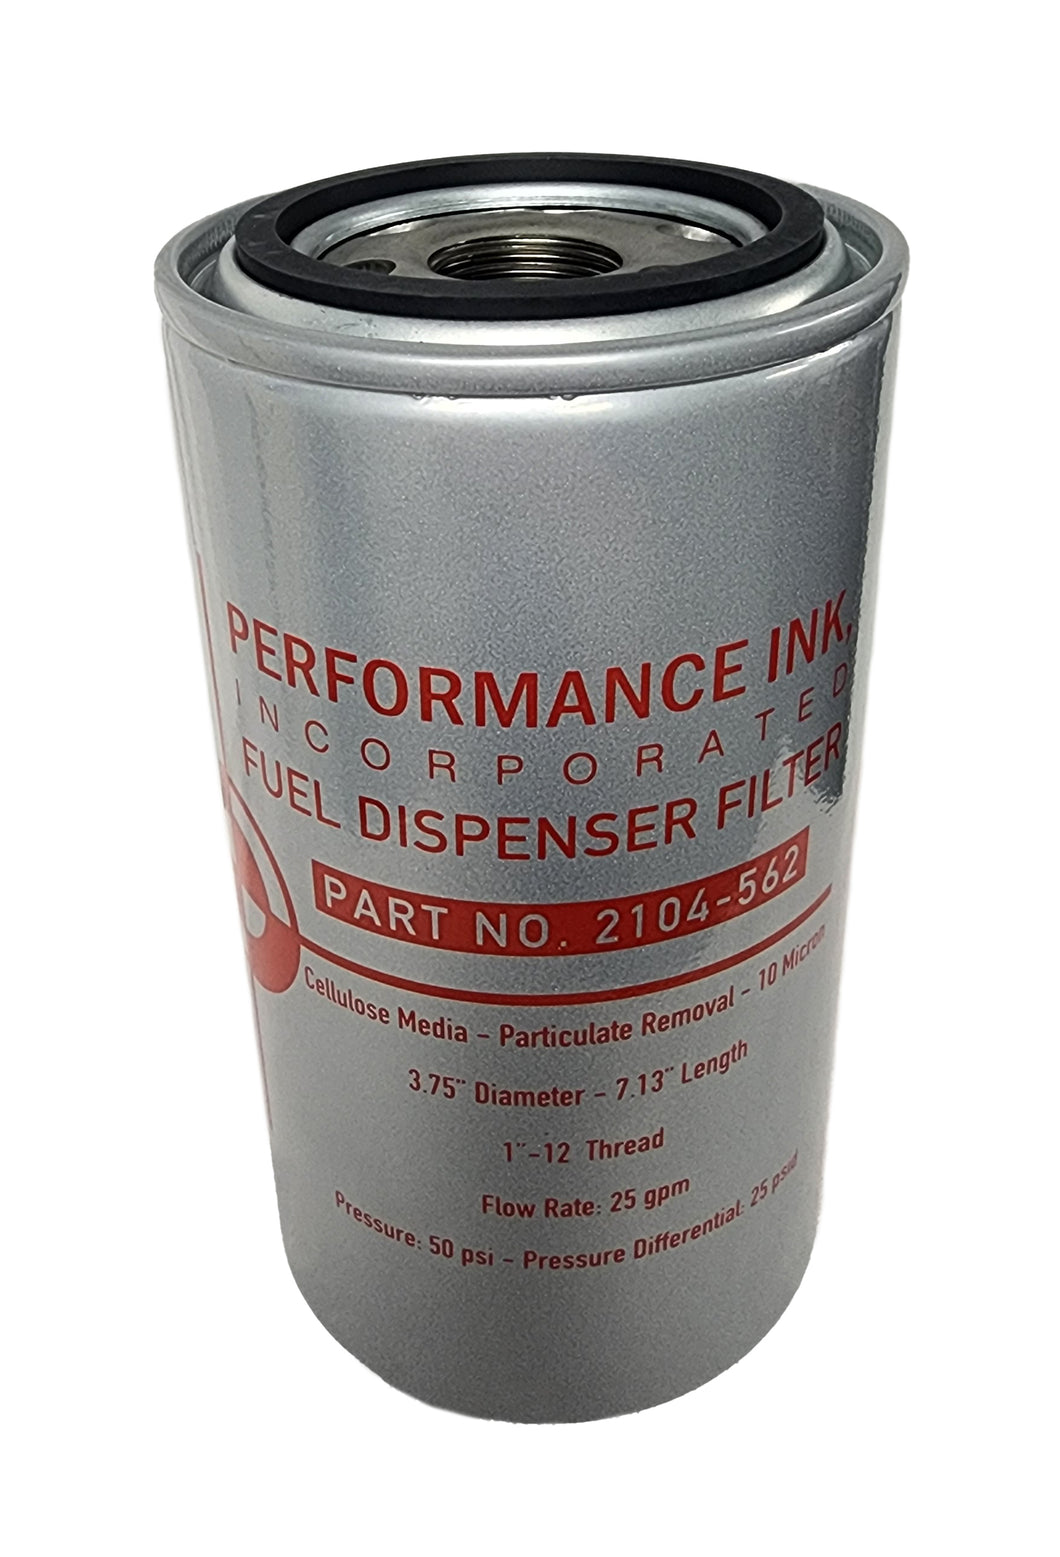 Performance Ink PI-2104-562, 10 Micron, 3/4